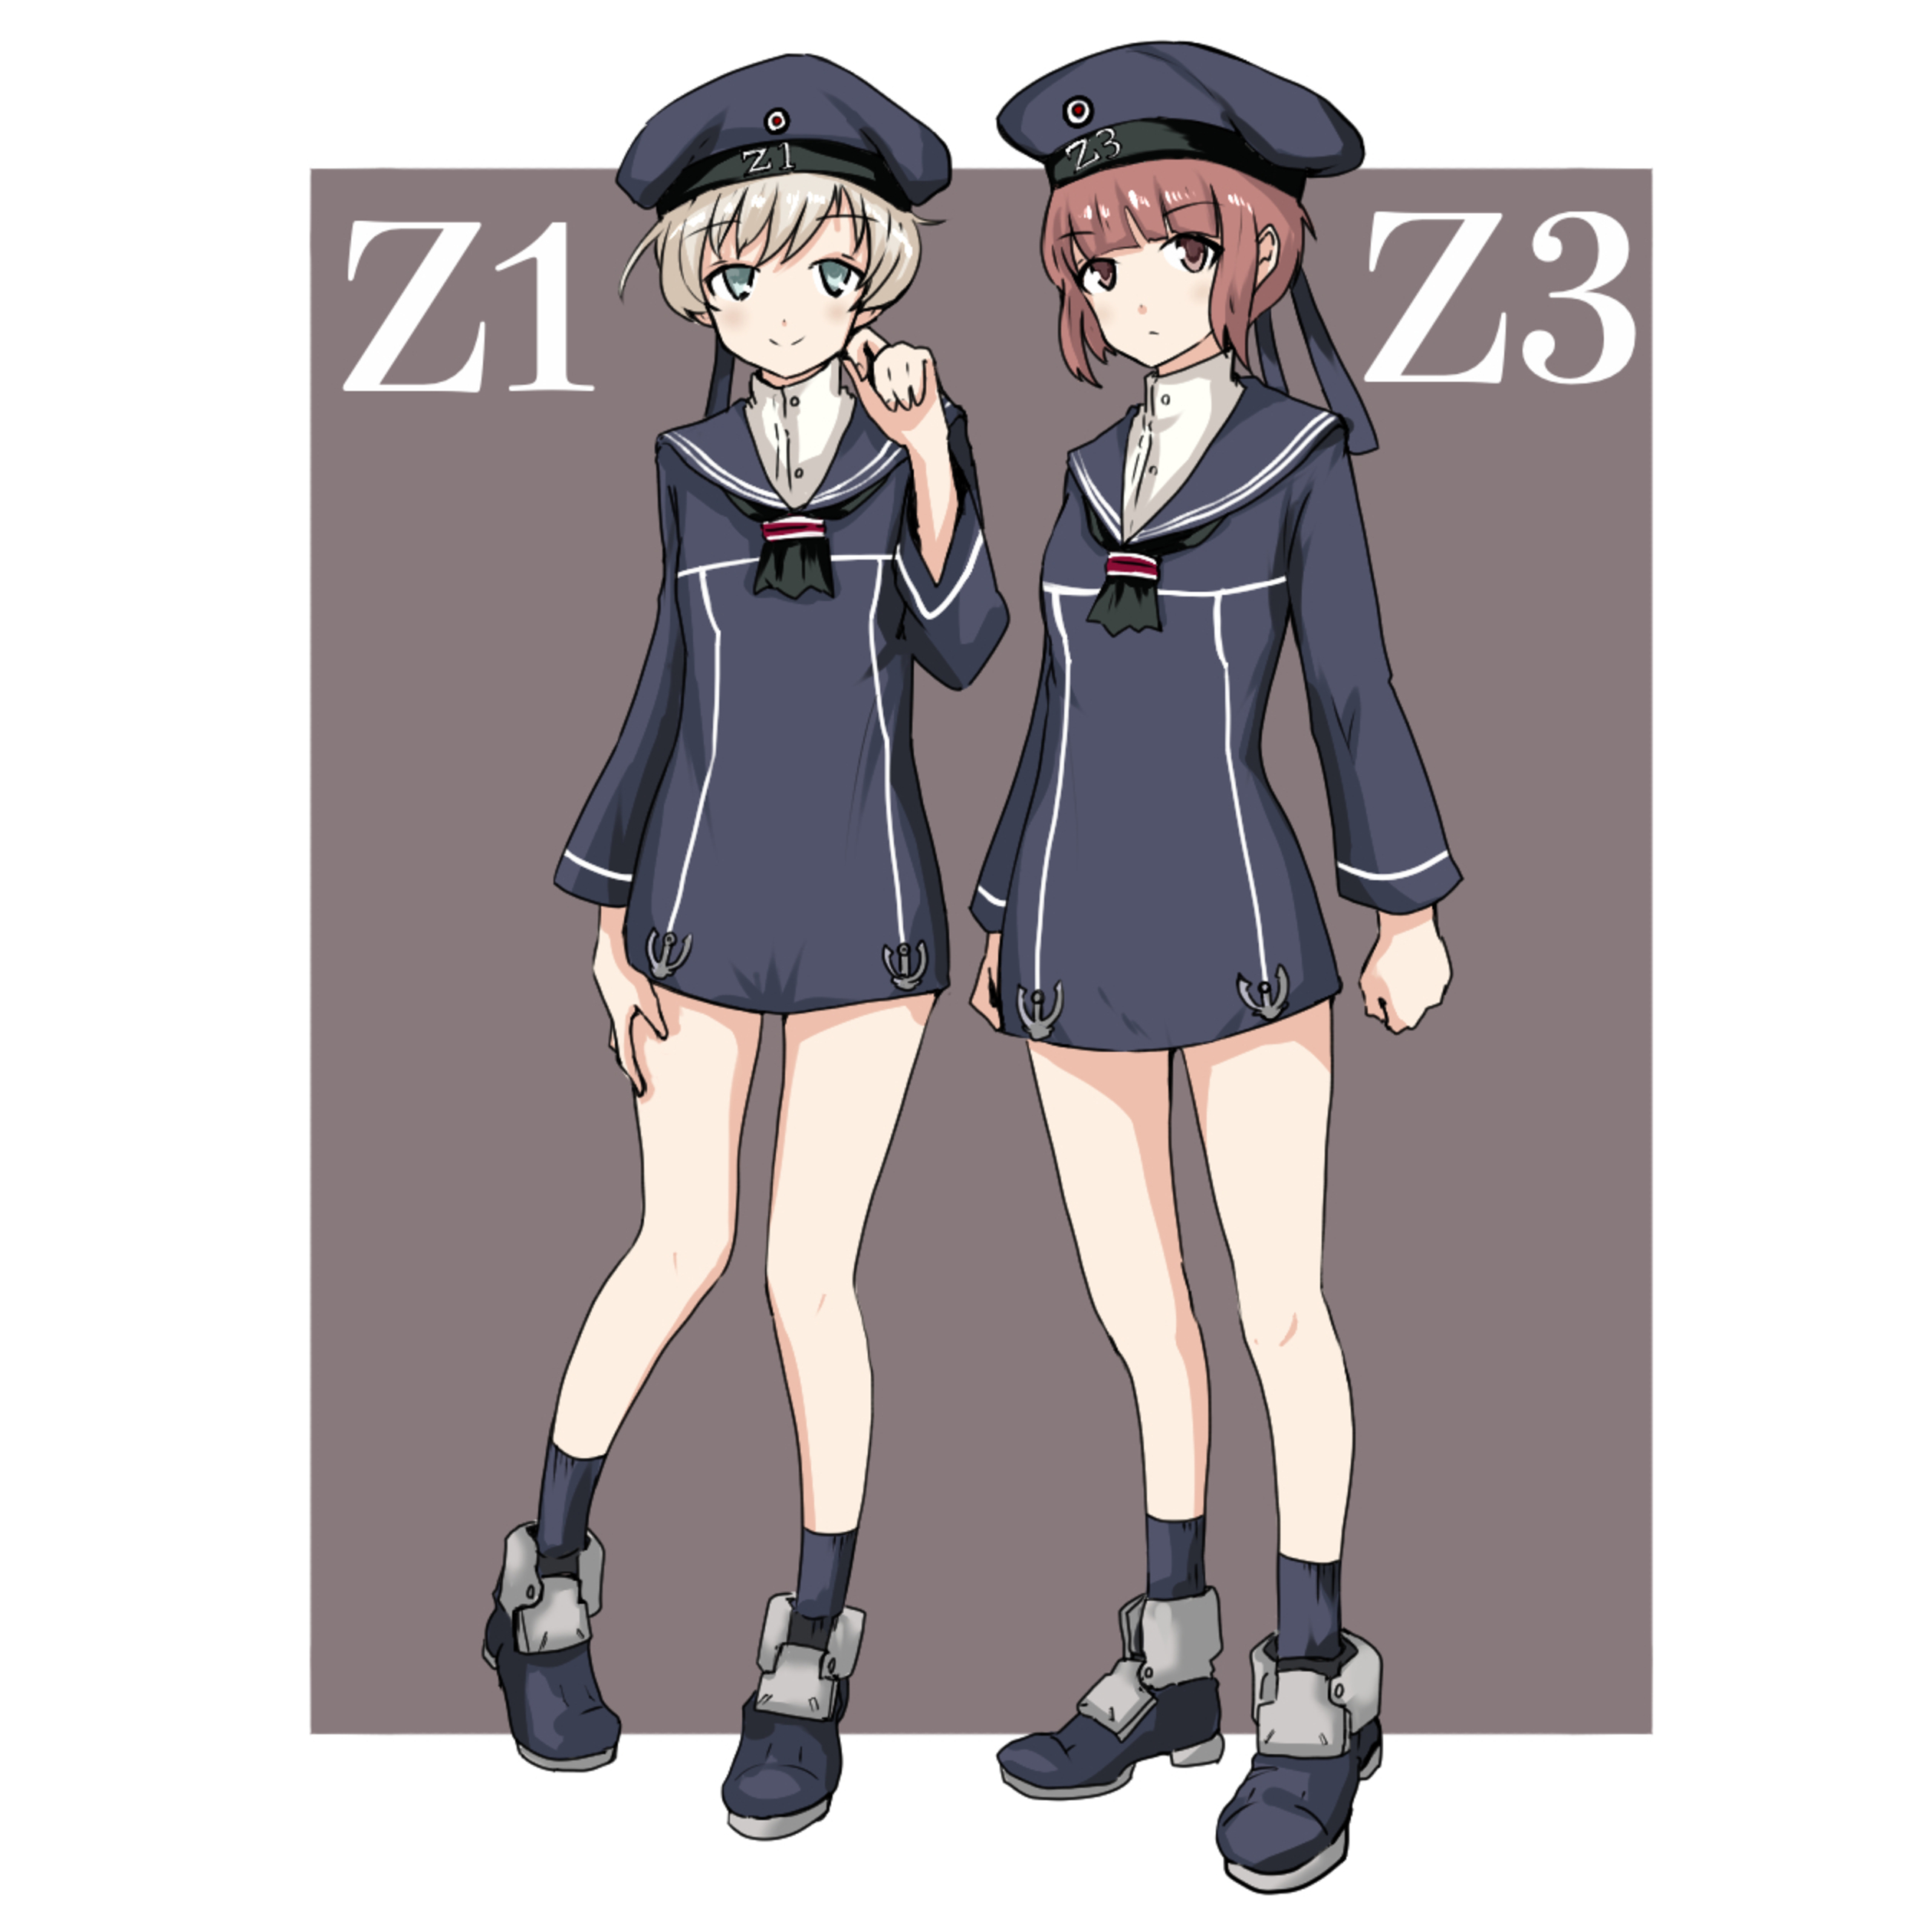 Anime Anime Girls Kantai Collection Z1 Leberecht Maass KanColle Z3 Max Schultz KanColle Short Hair G 2520x2520